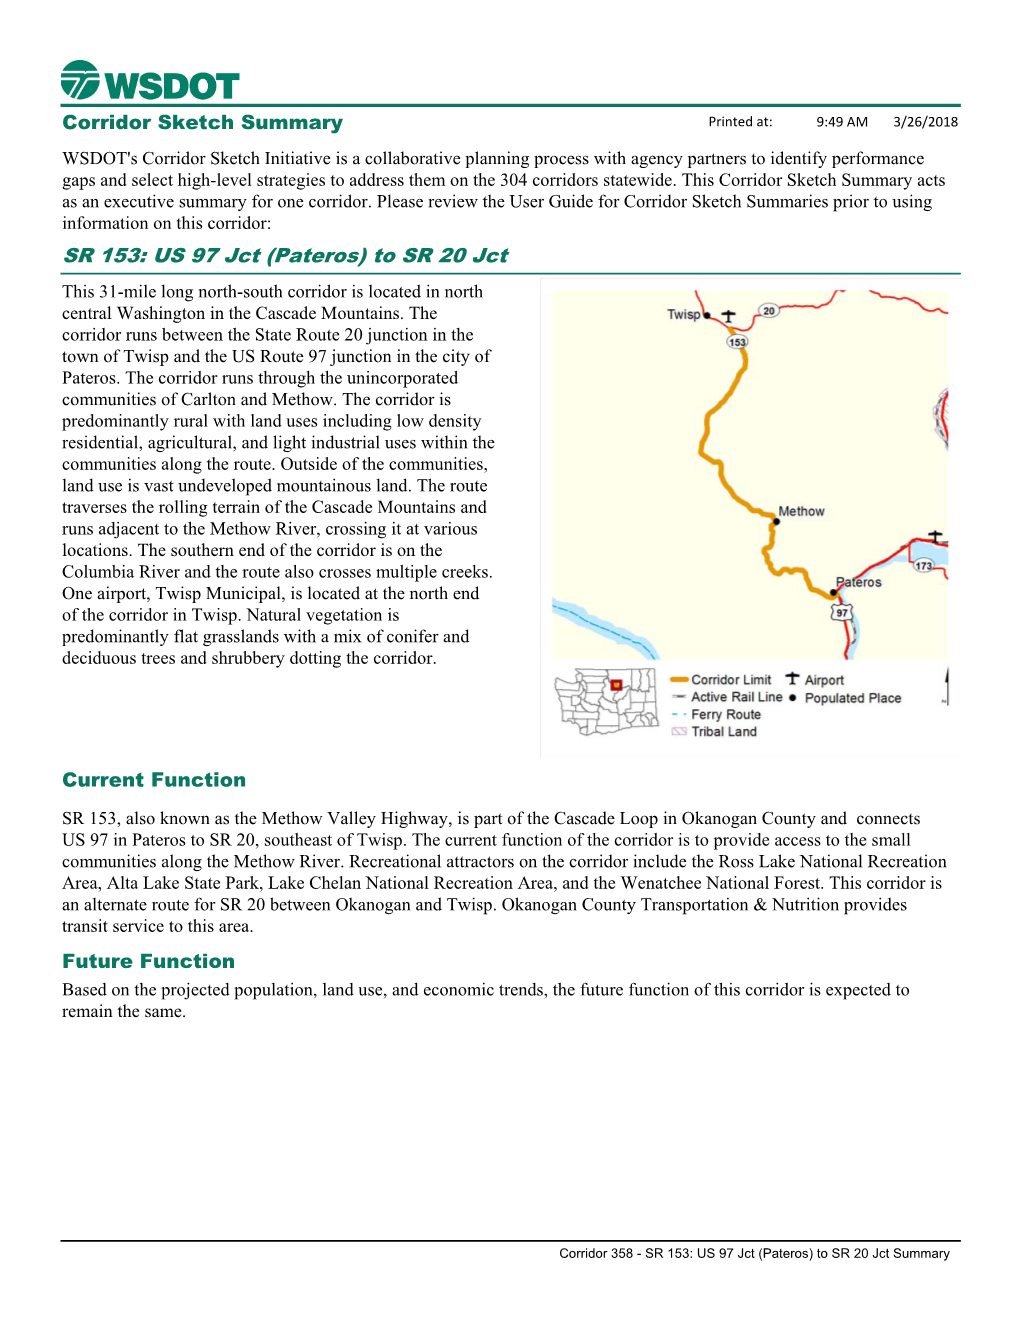 (Pateros) to SR 20 Jct Corridor Sketch Summary